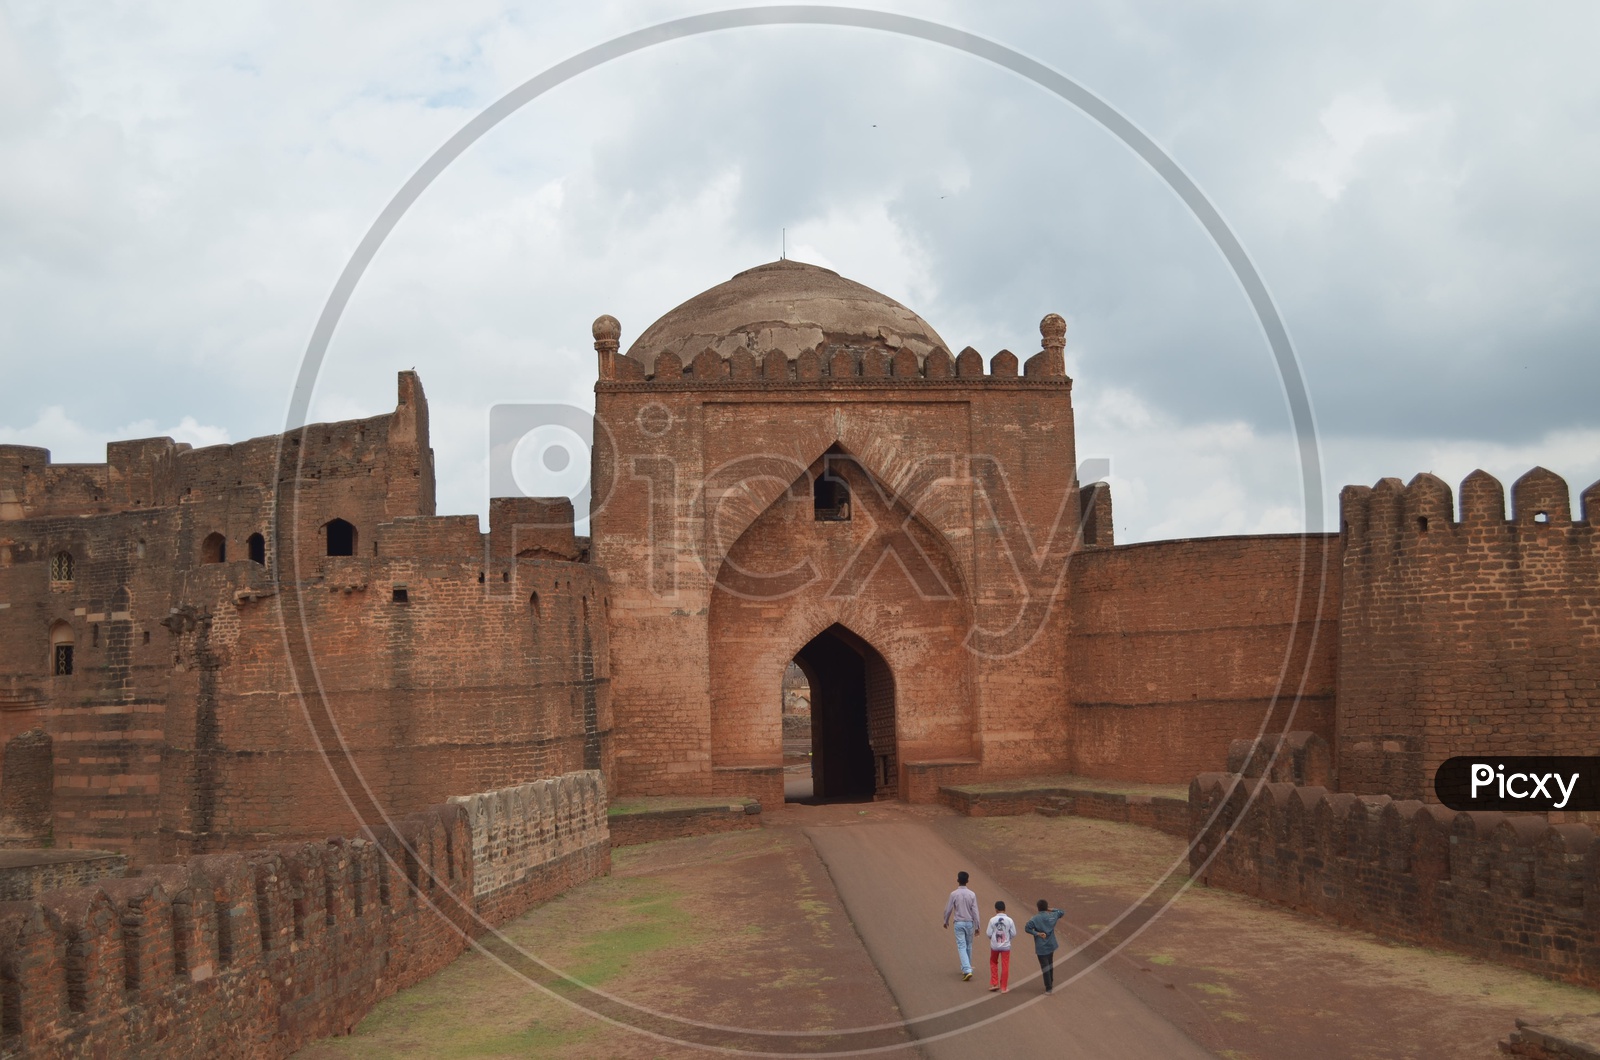 Gateway to Bidar fort,Bidar / Historical Construction / Historical Architecture